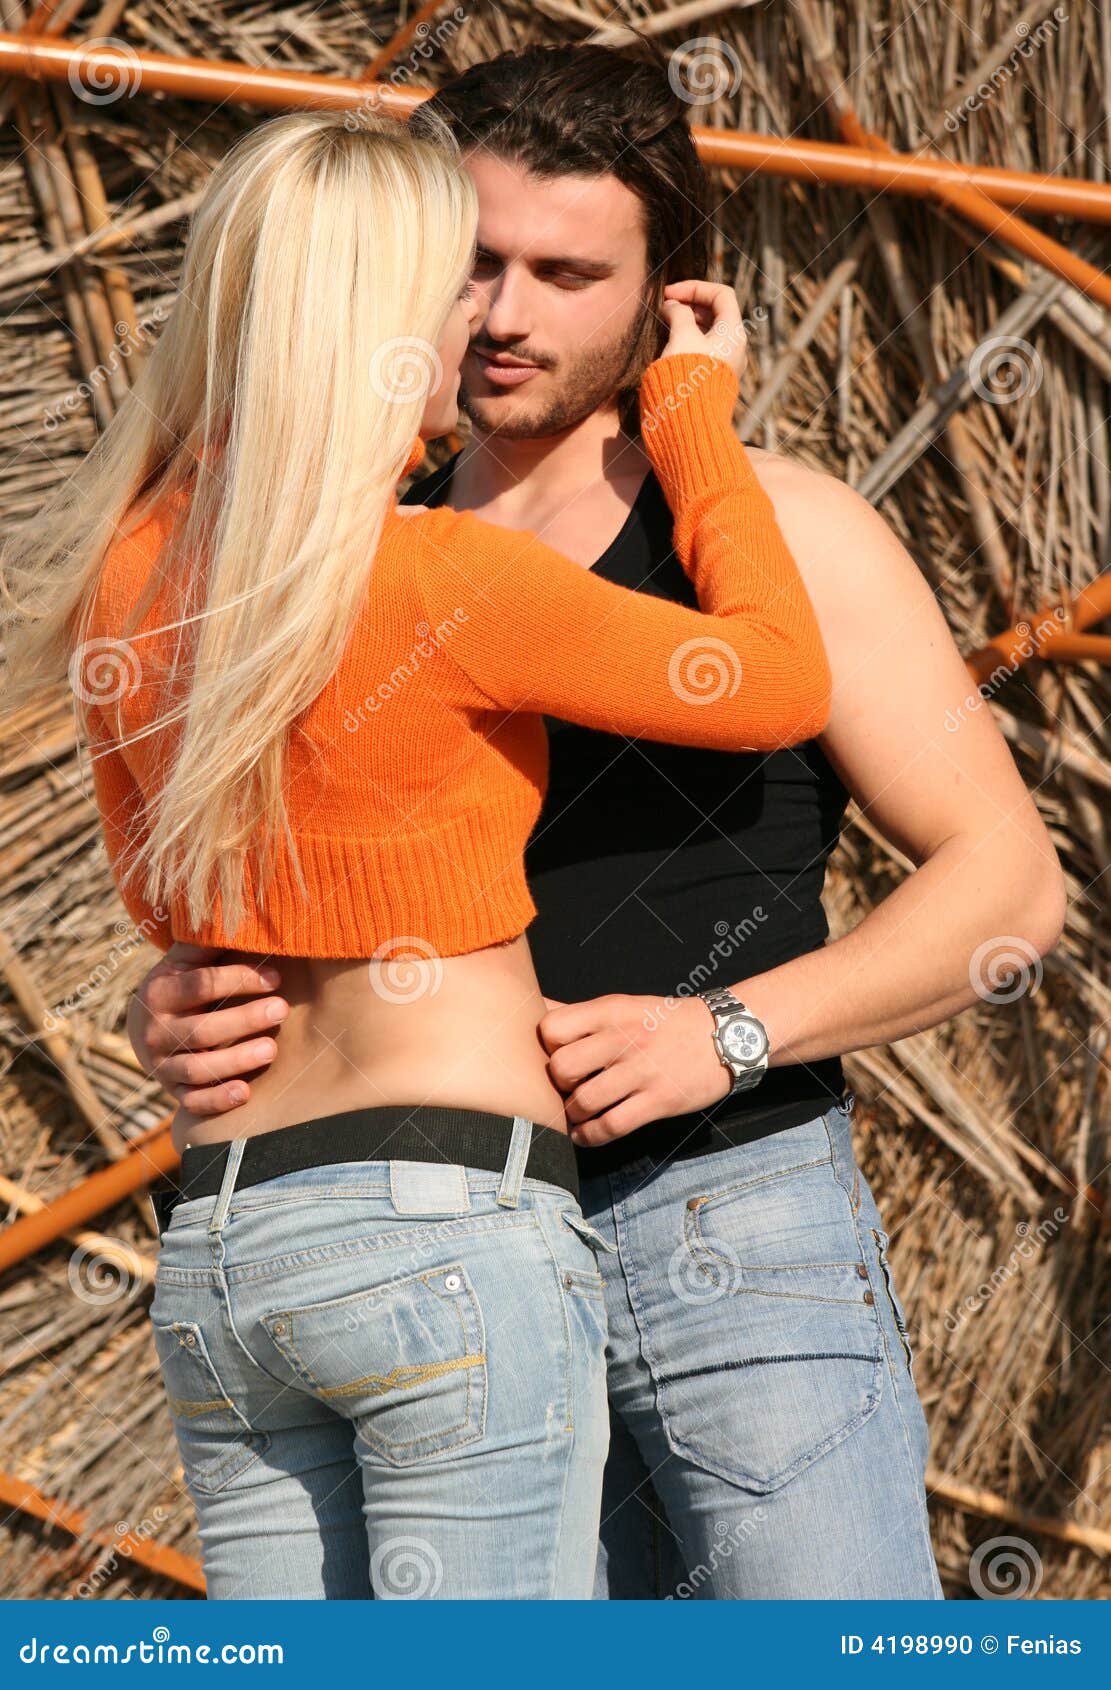 492 Couple Kissing Romantic Pose Stock Photos